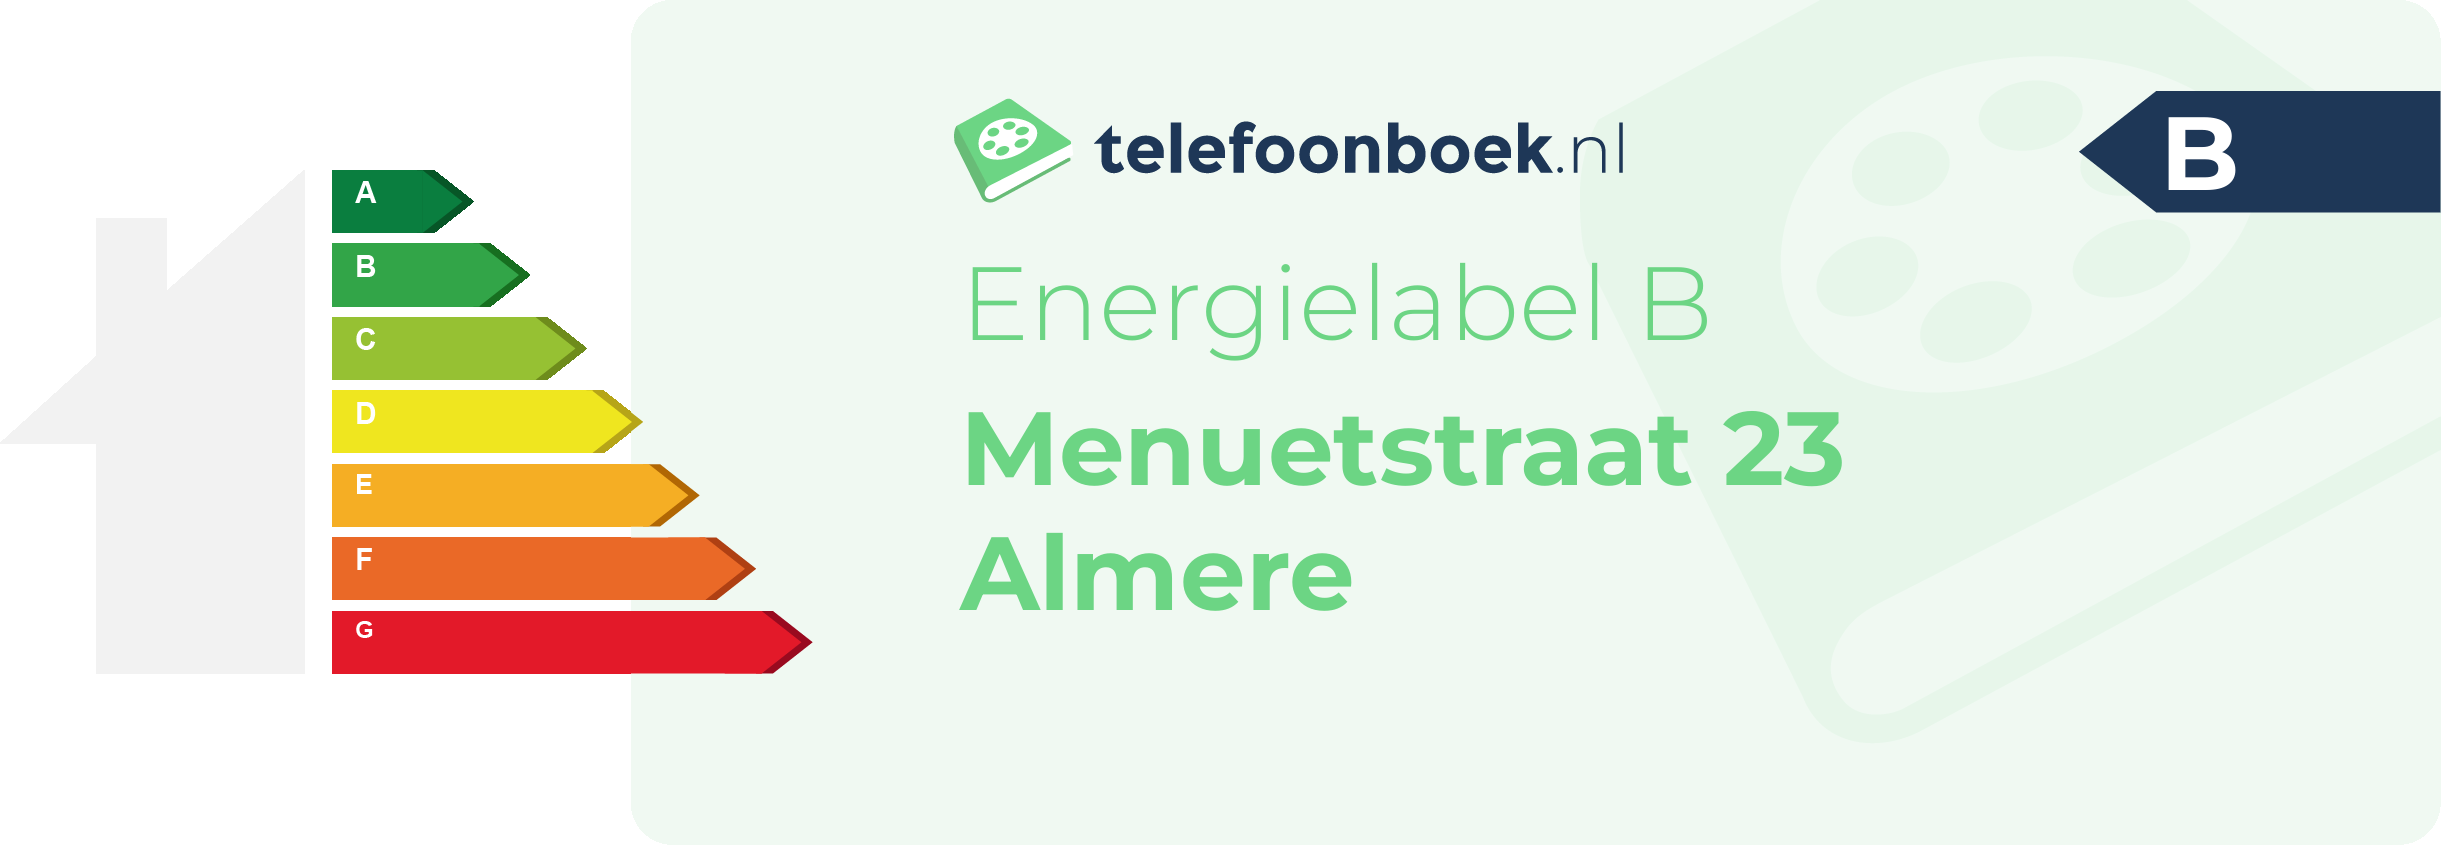 Energielabel Menuetstraat 23 Almere